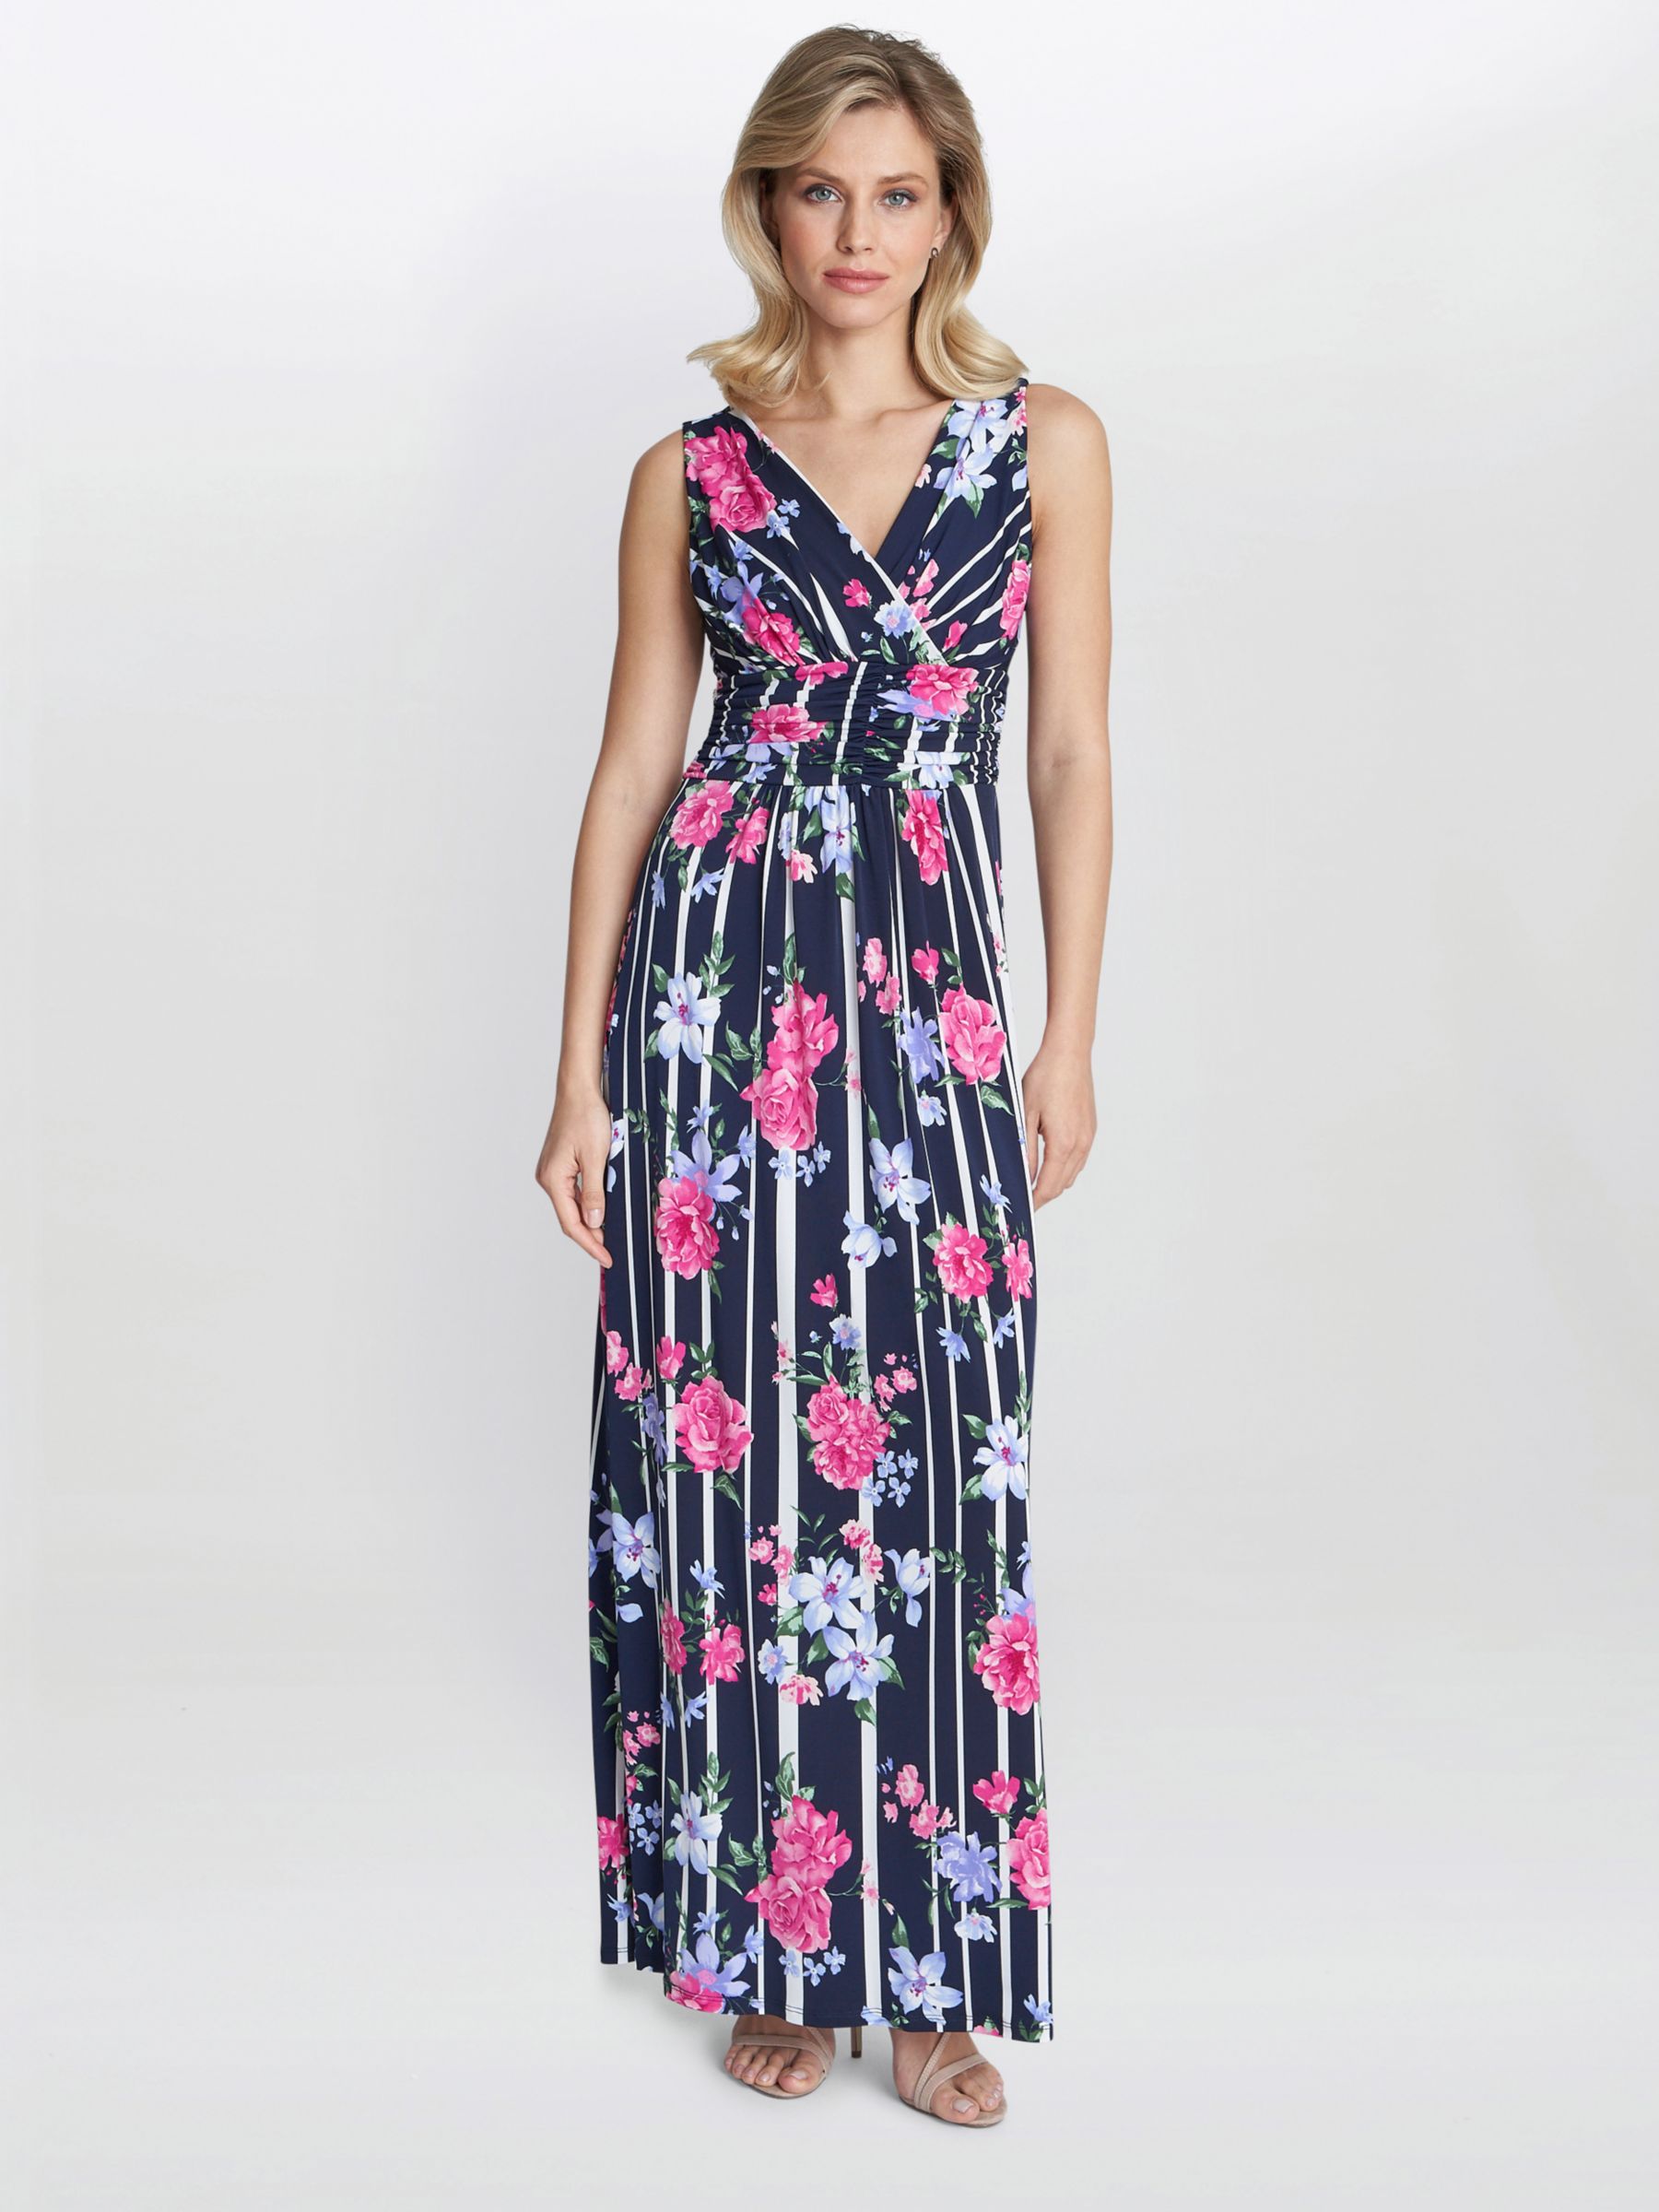 Gina Bacconi Maxene Floral Maxi Dress, Pink/Navy at John Lewis & Partners